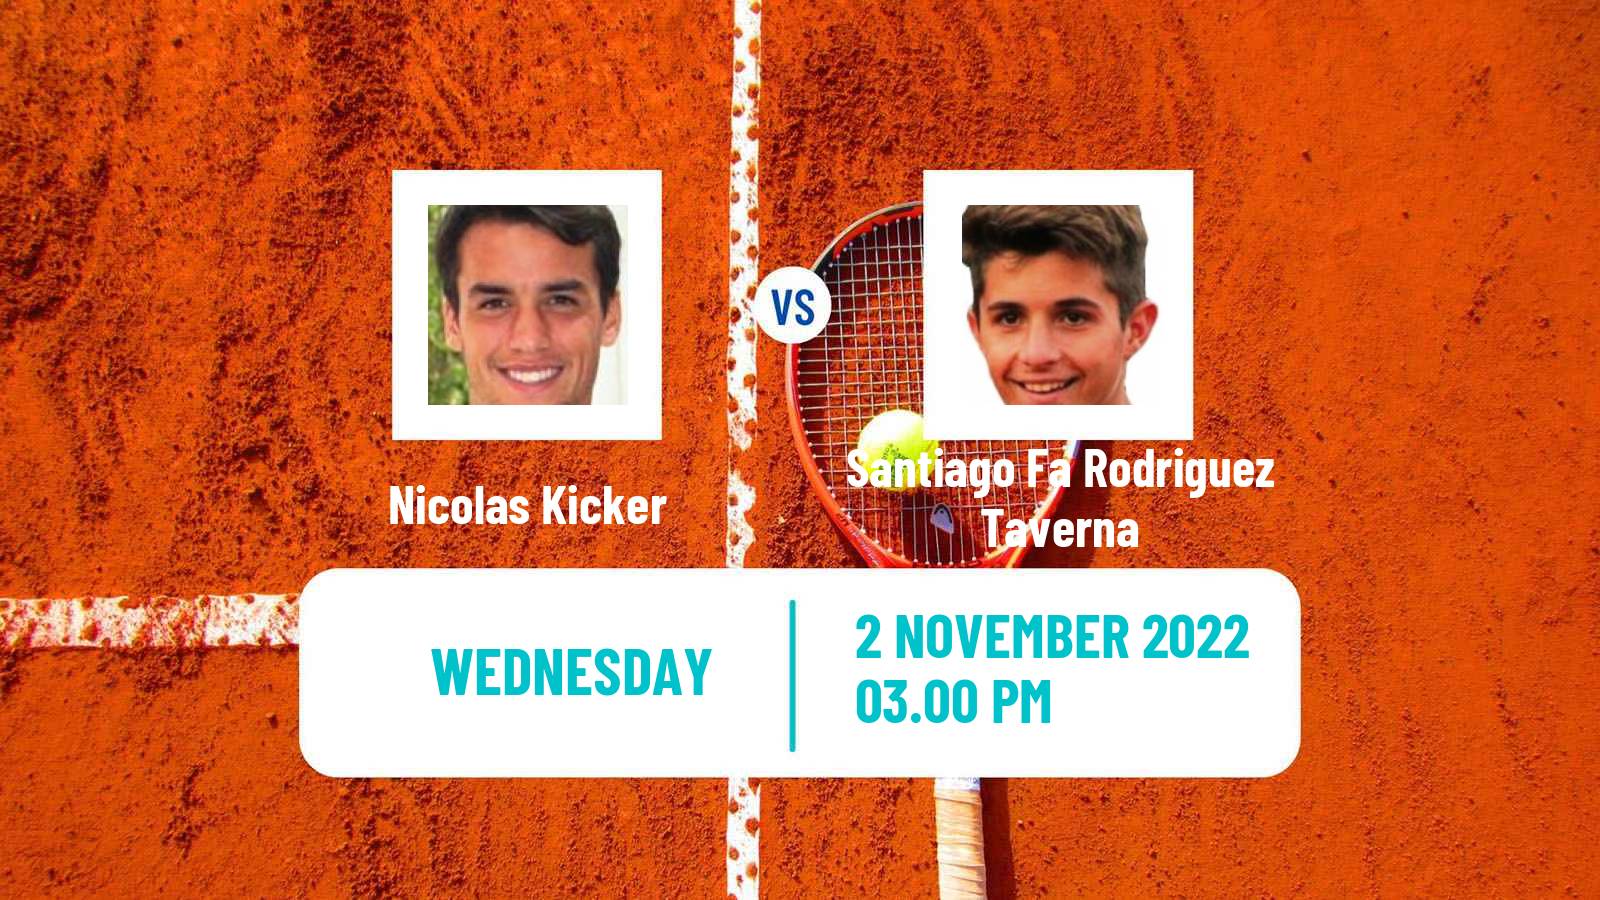 Tennis ATP Challenger Nicolas Kicker - Santiago Fa Rodriguez Taverna